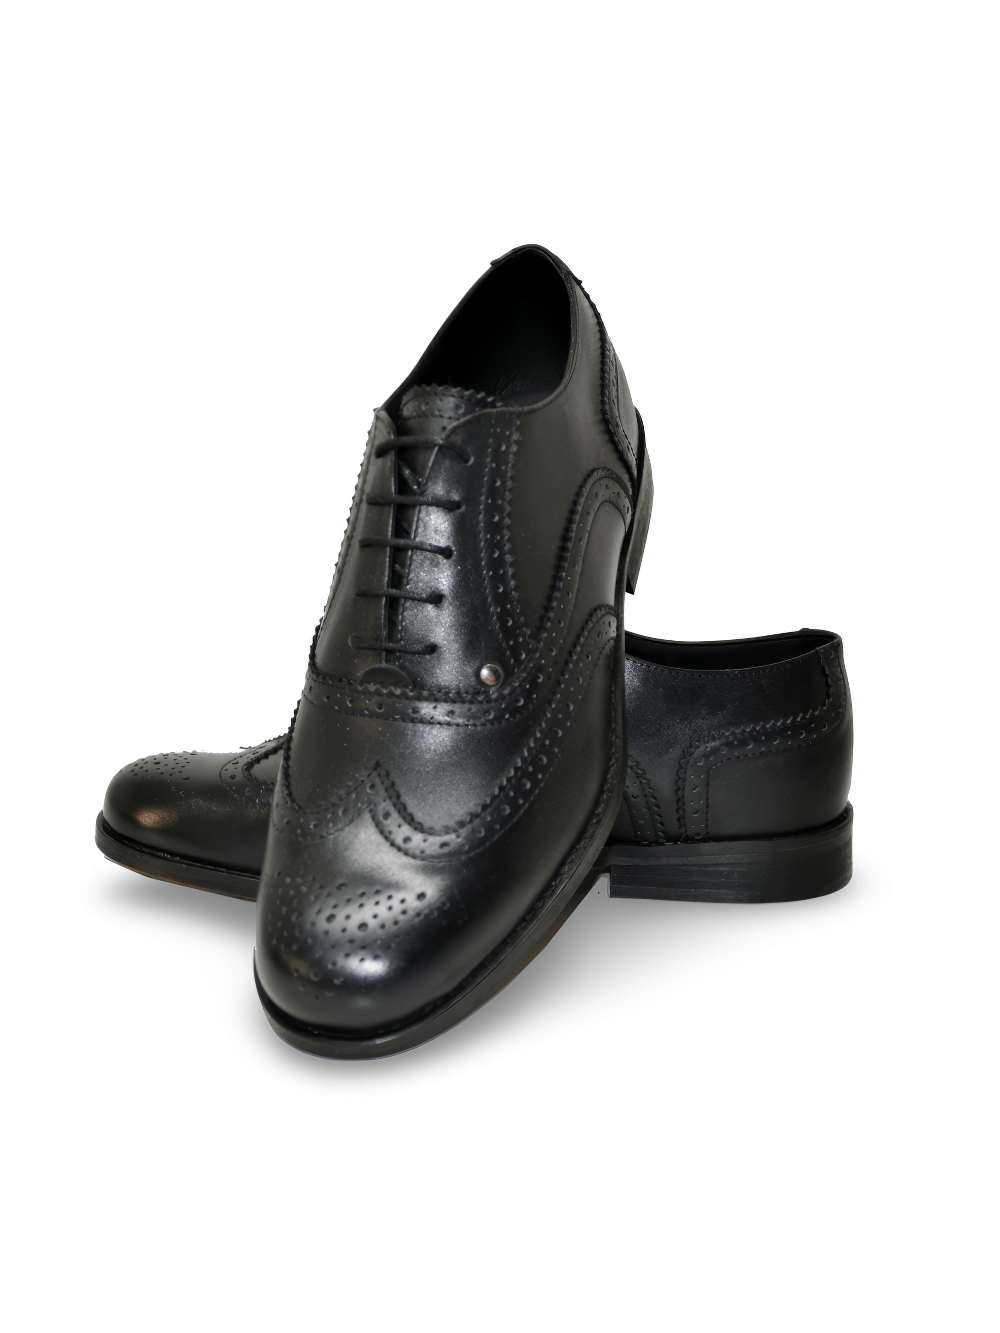 Elegant Flat Black Lace-Up Oxford Shoes for Men